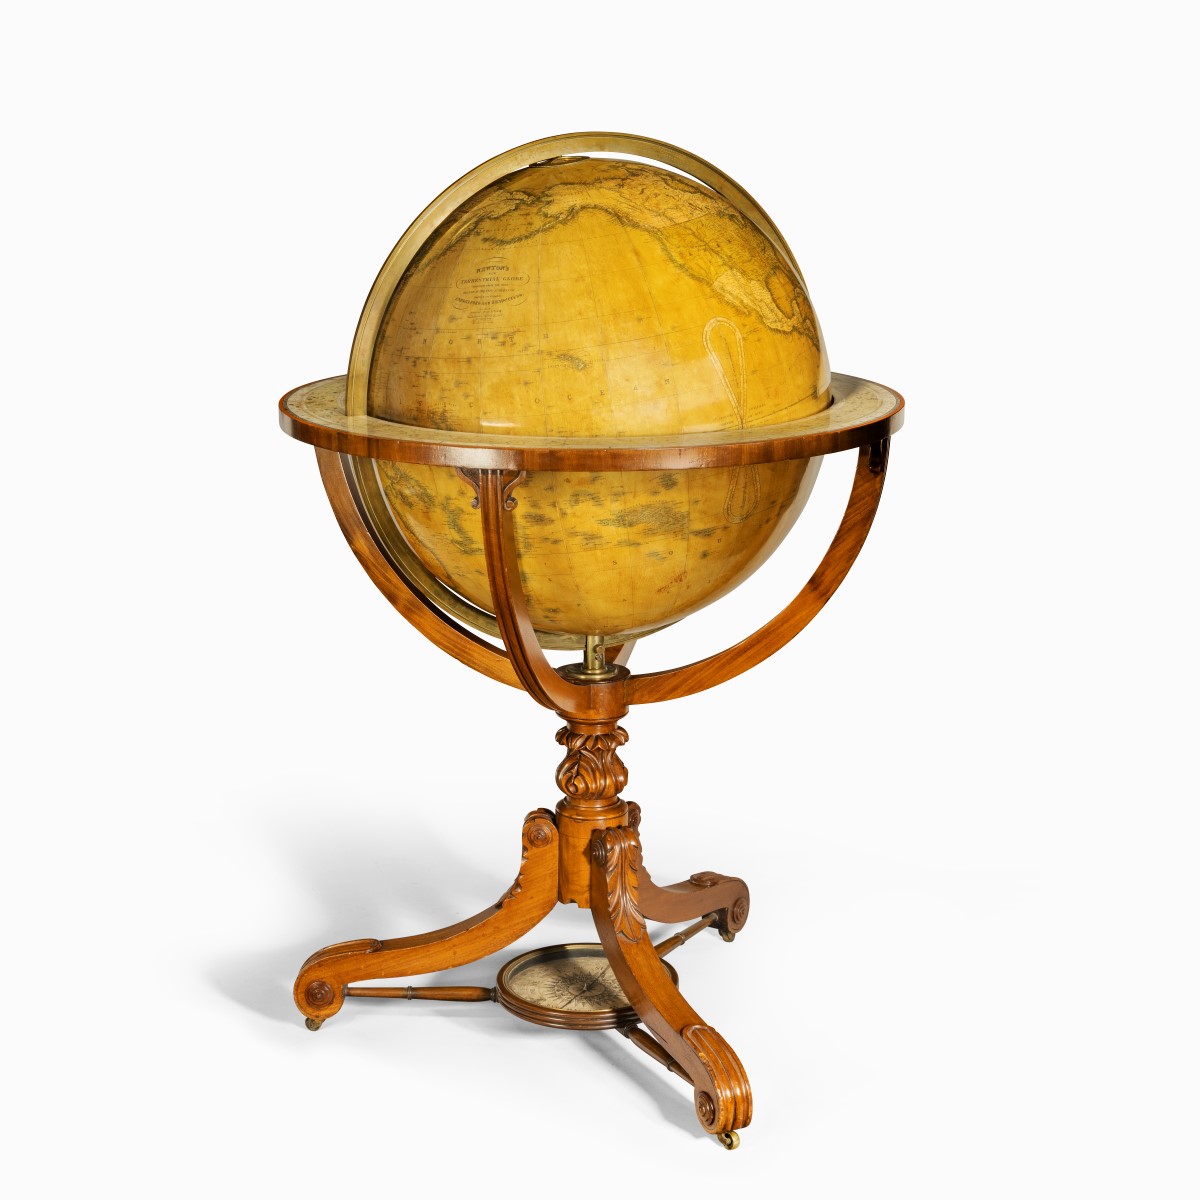 24-inch Newton globe main image